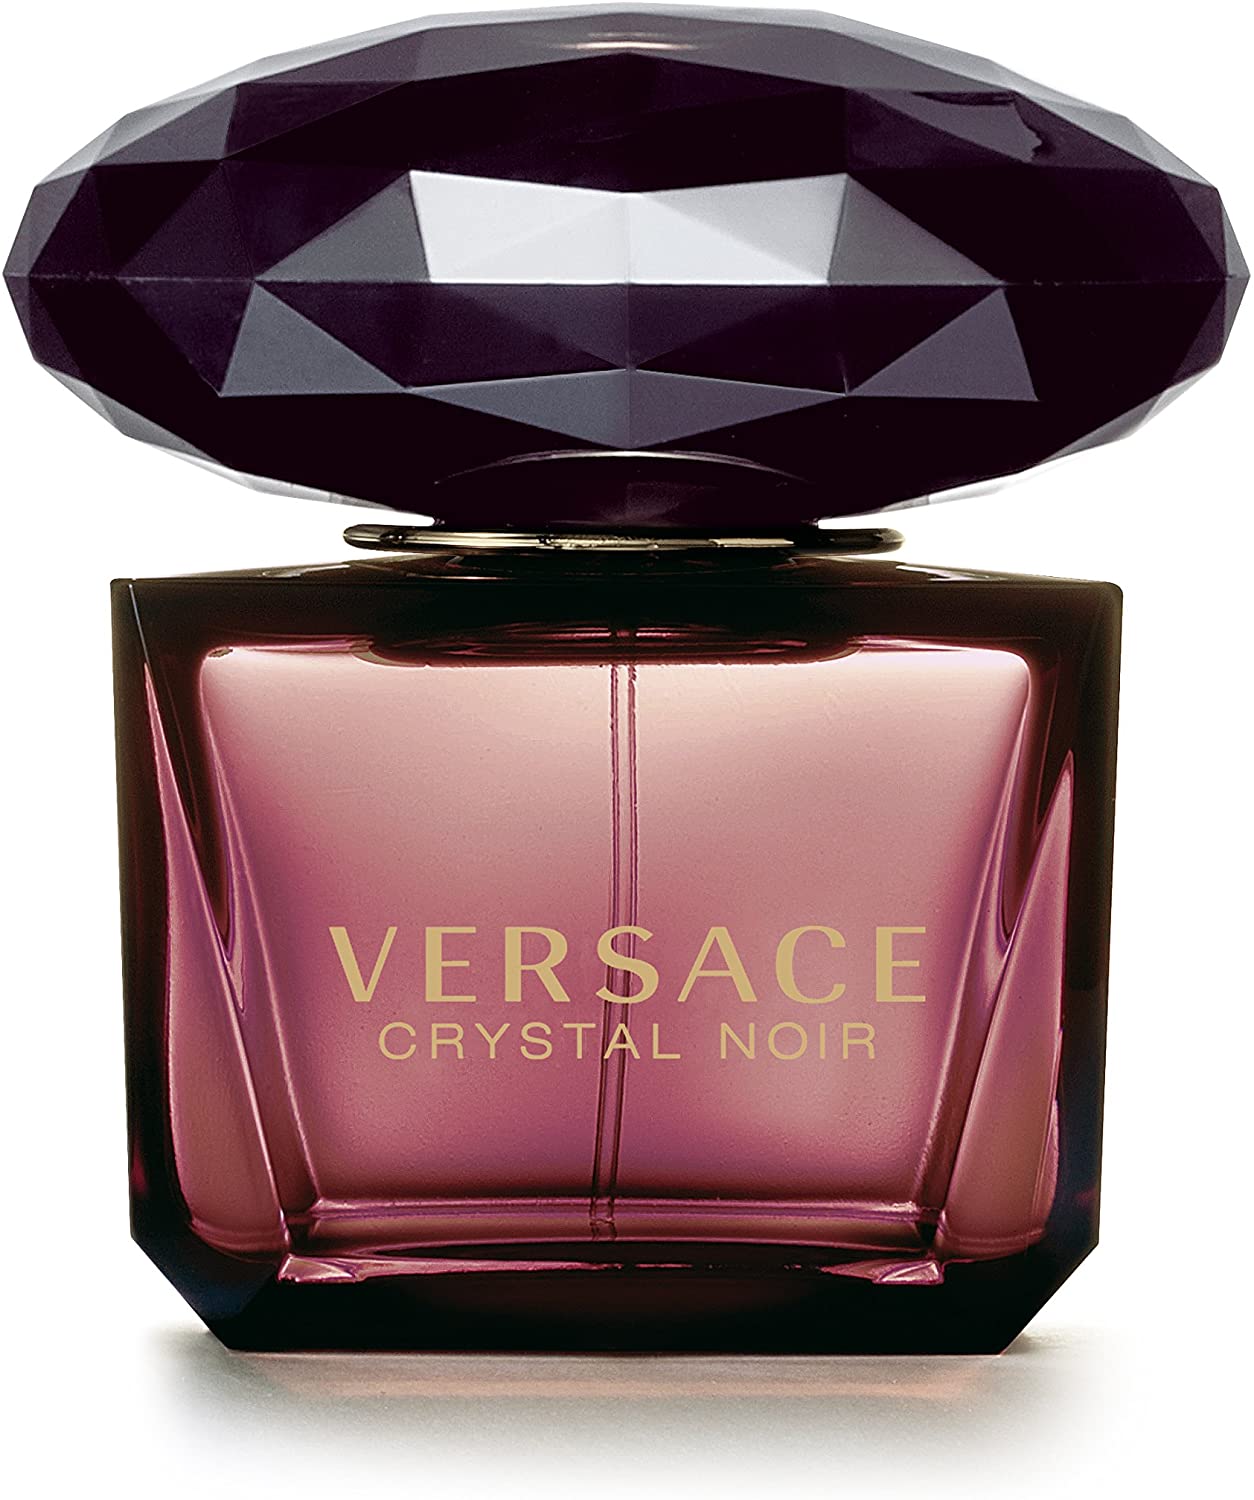 Versace Crystal Noir by Versace for Women - Eau de Toilette, 90ml